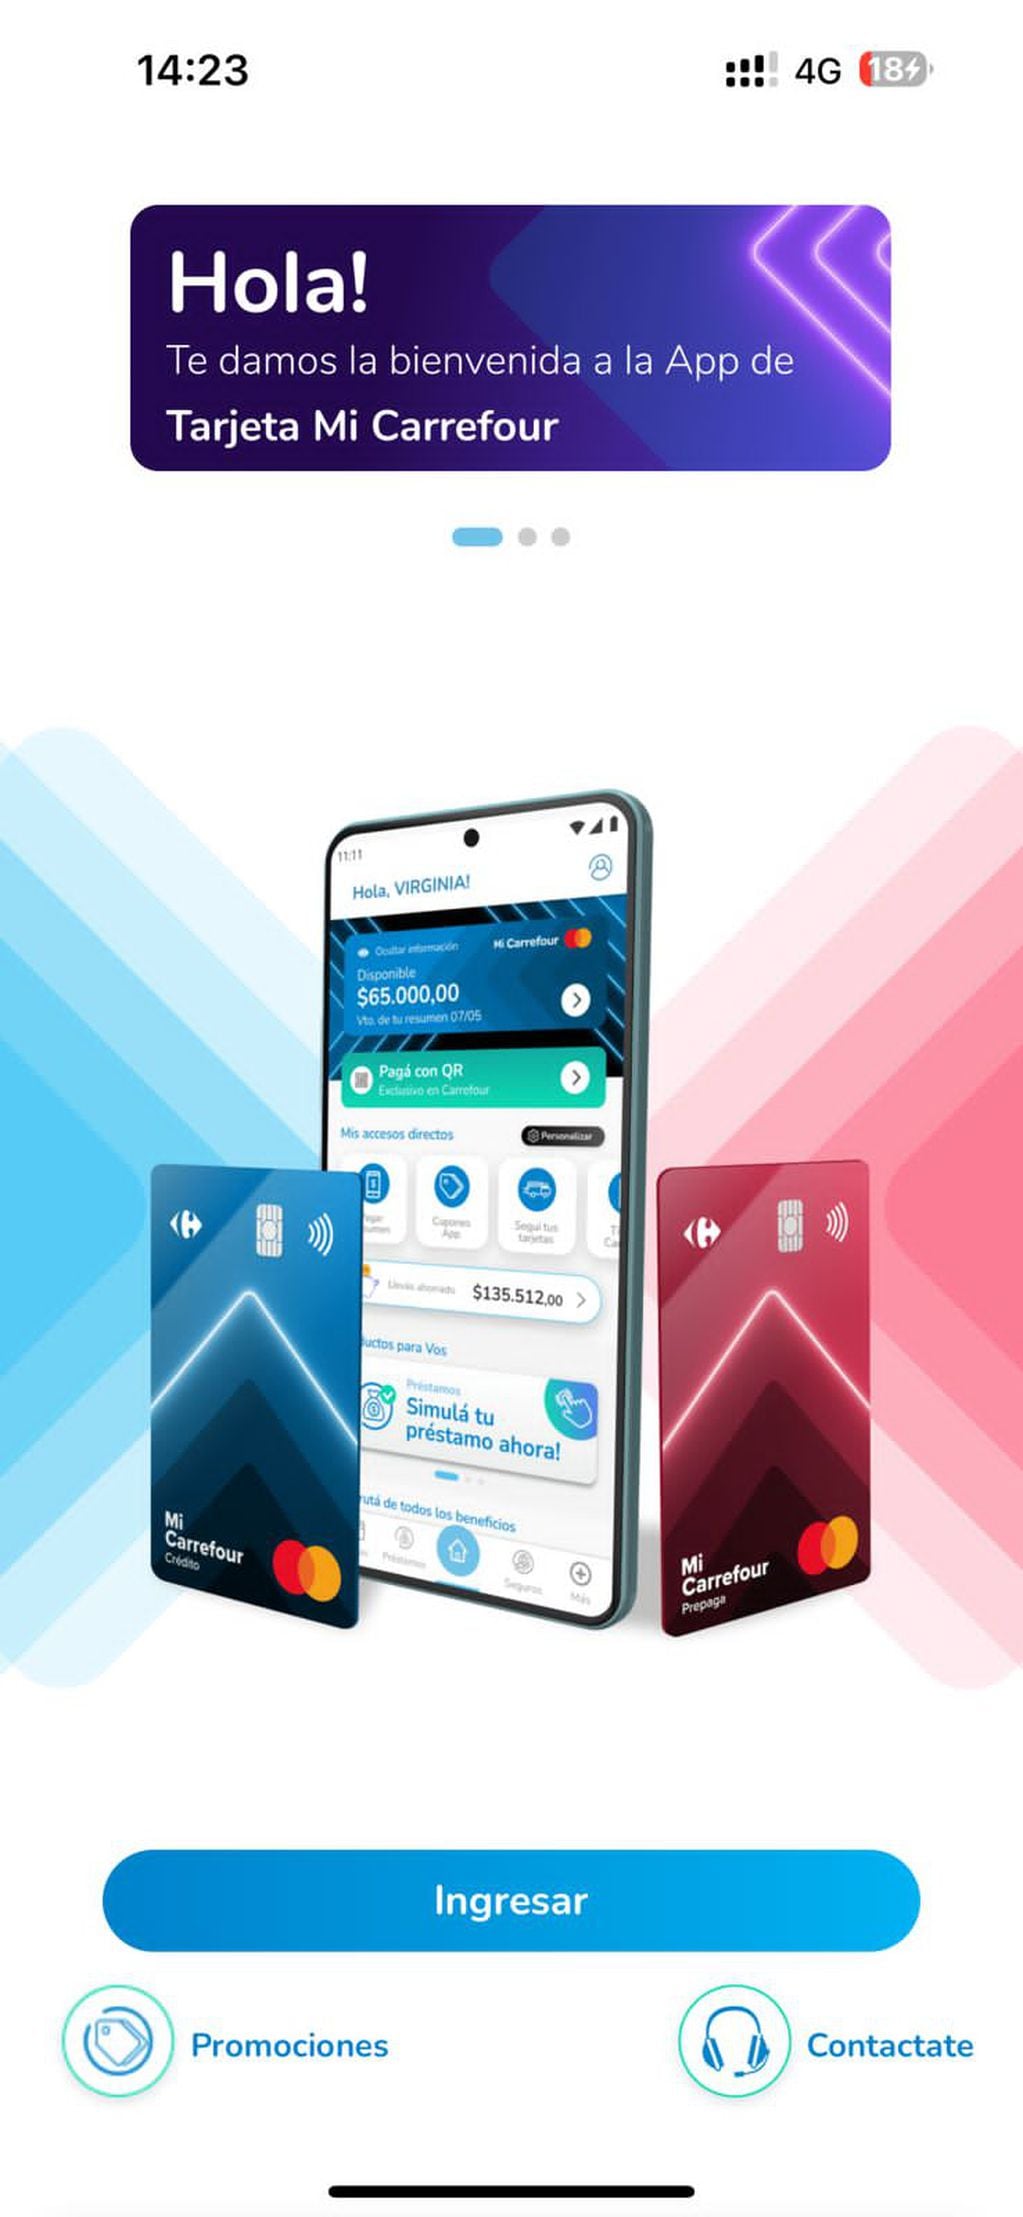 La tarjeta prepaga de Carrefour permite operar 100% digital. - Gentileza